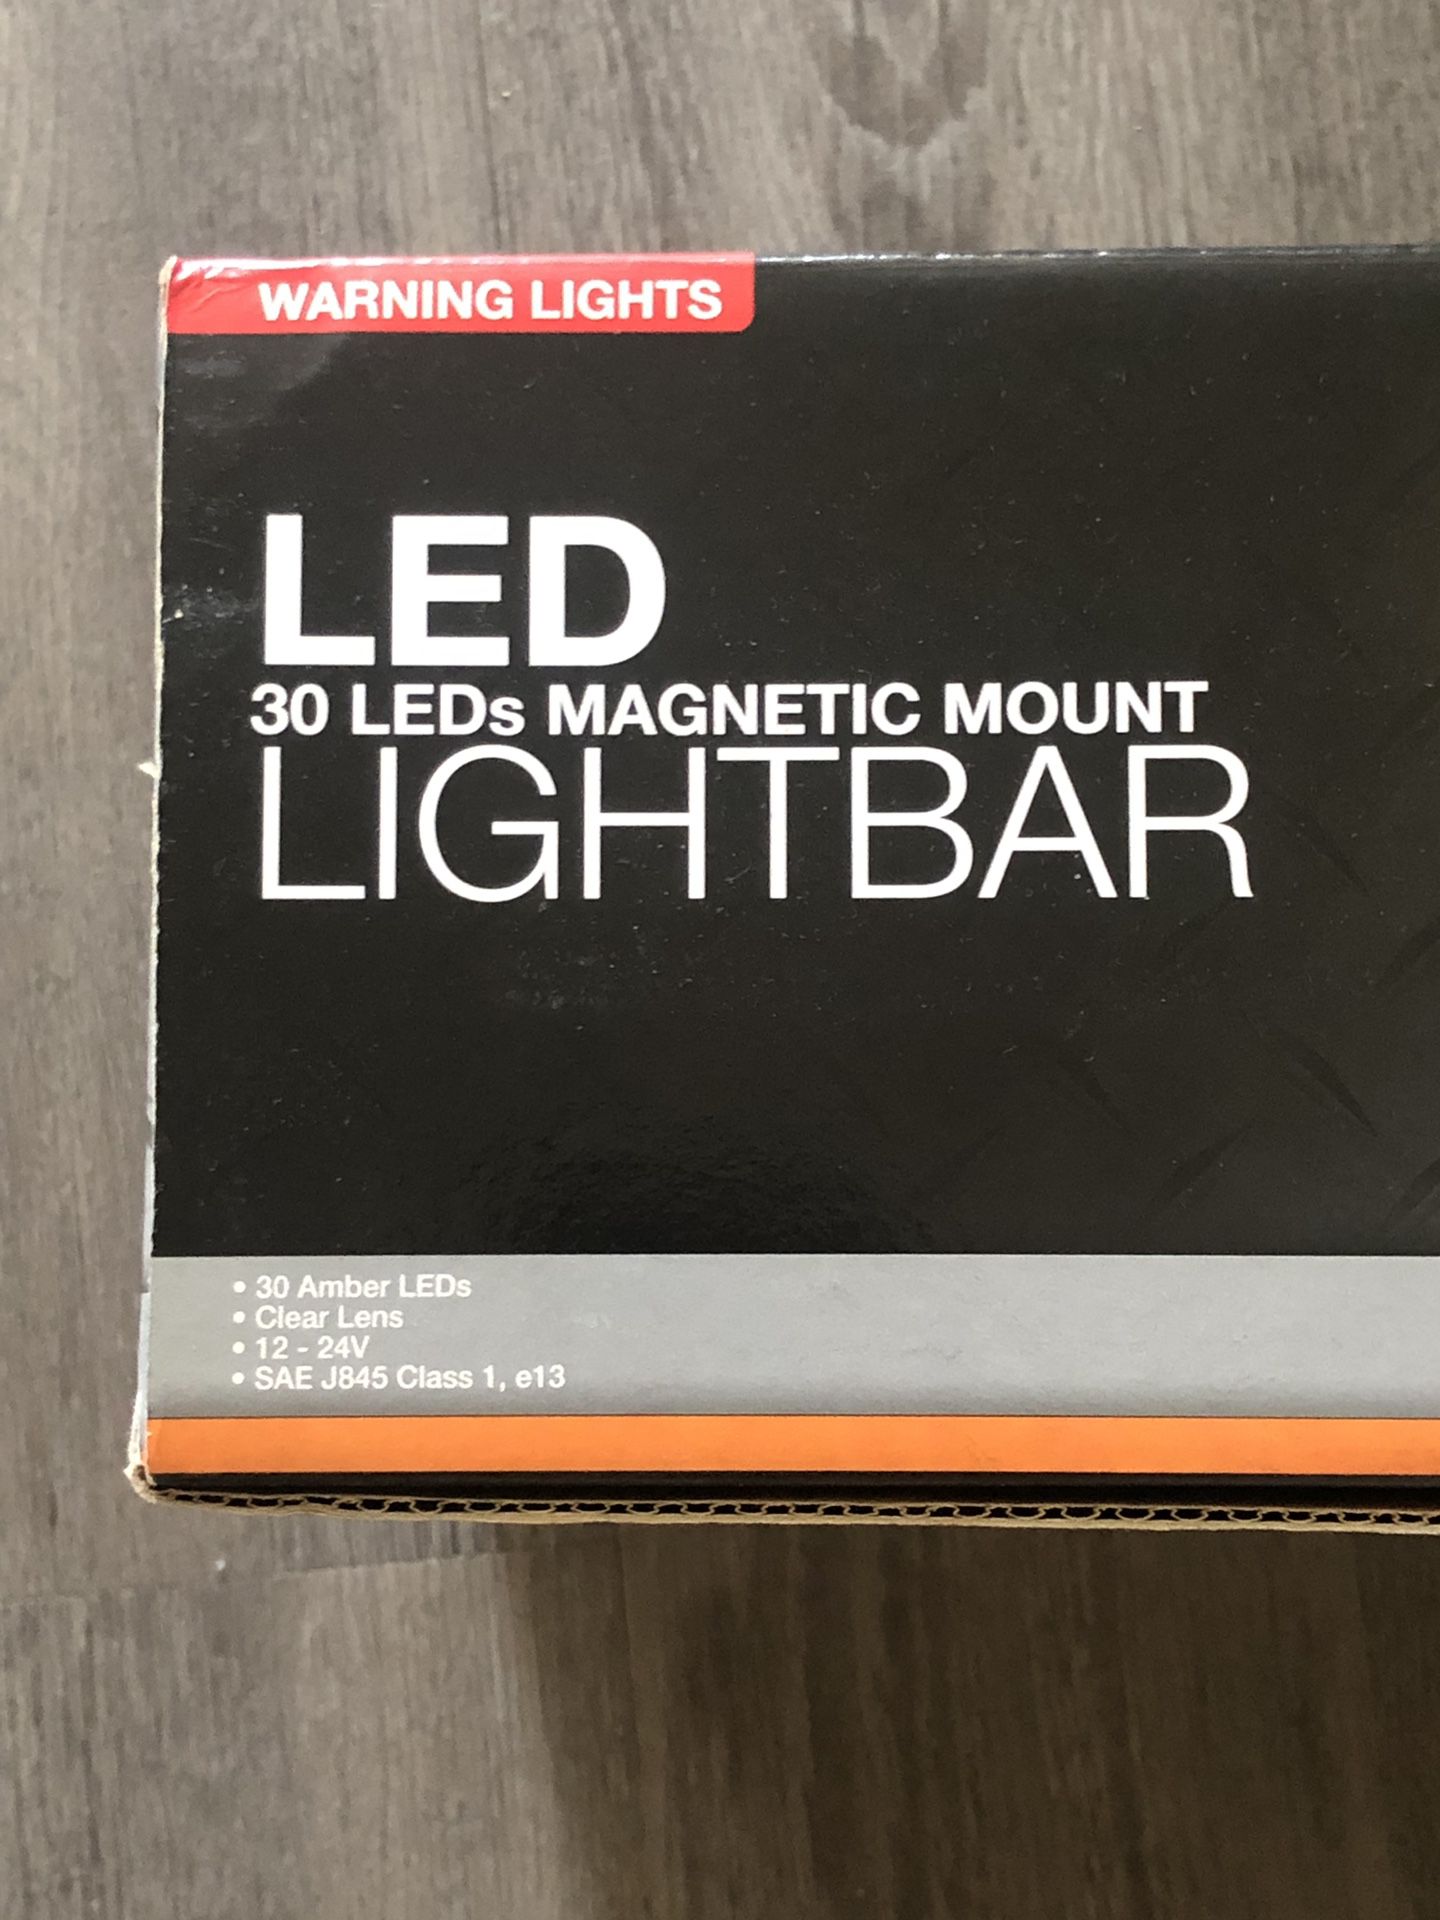 LED Light Bar - Car magnetic mount